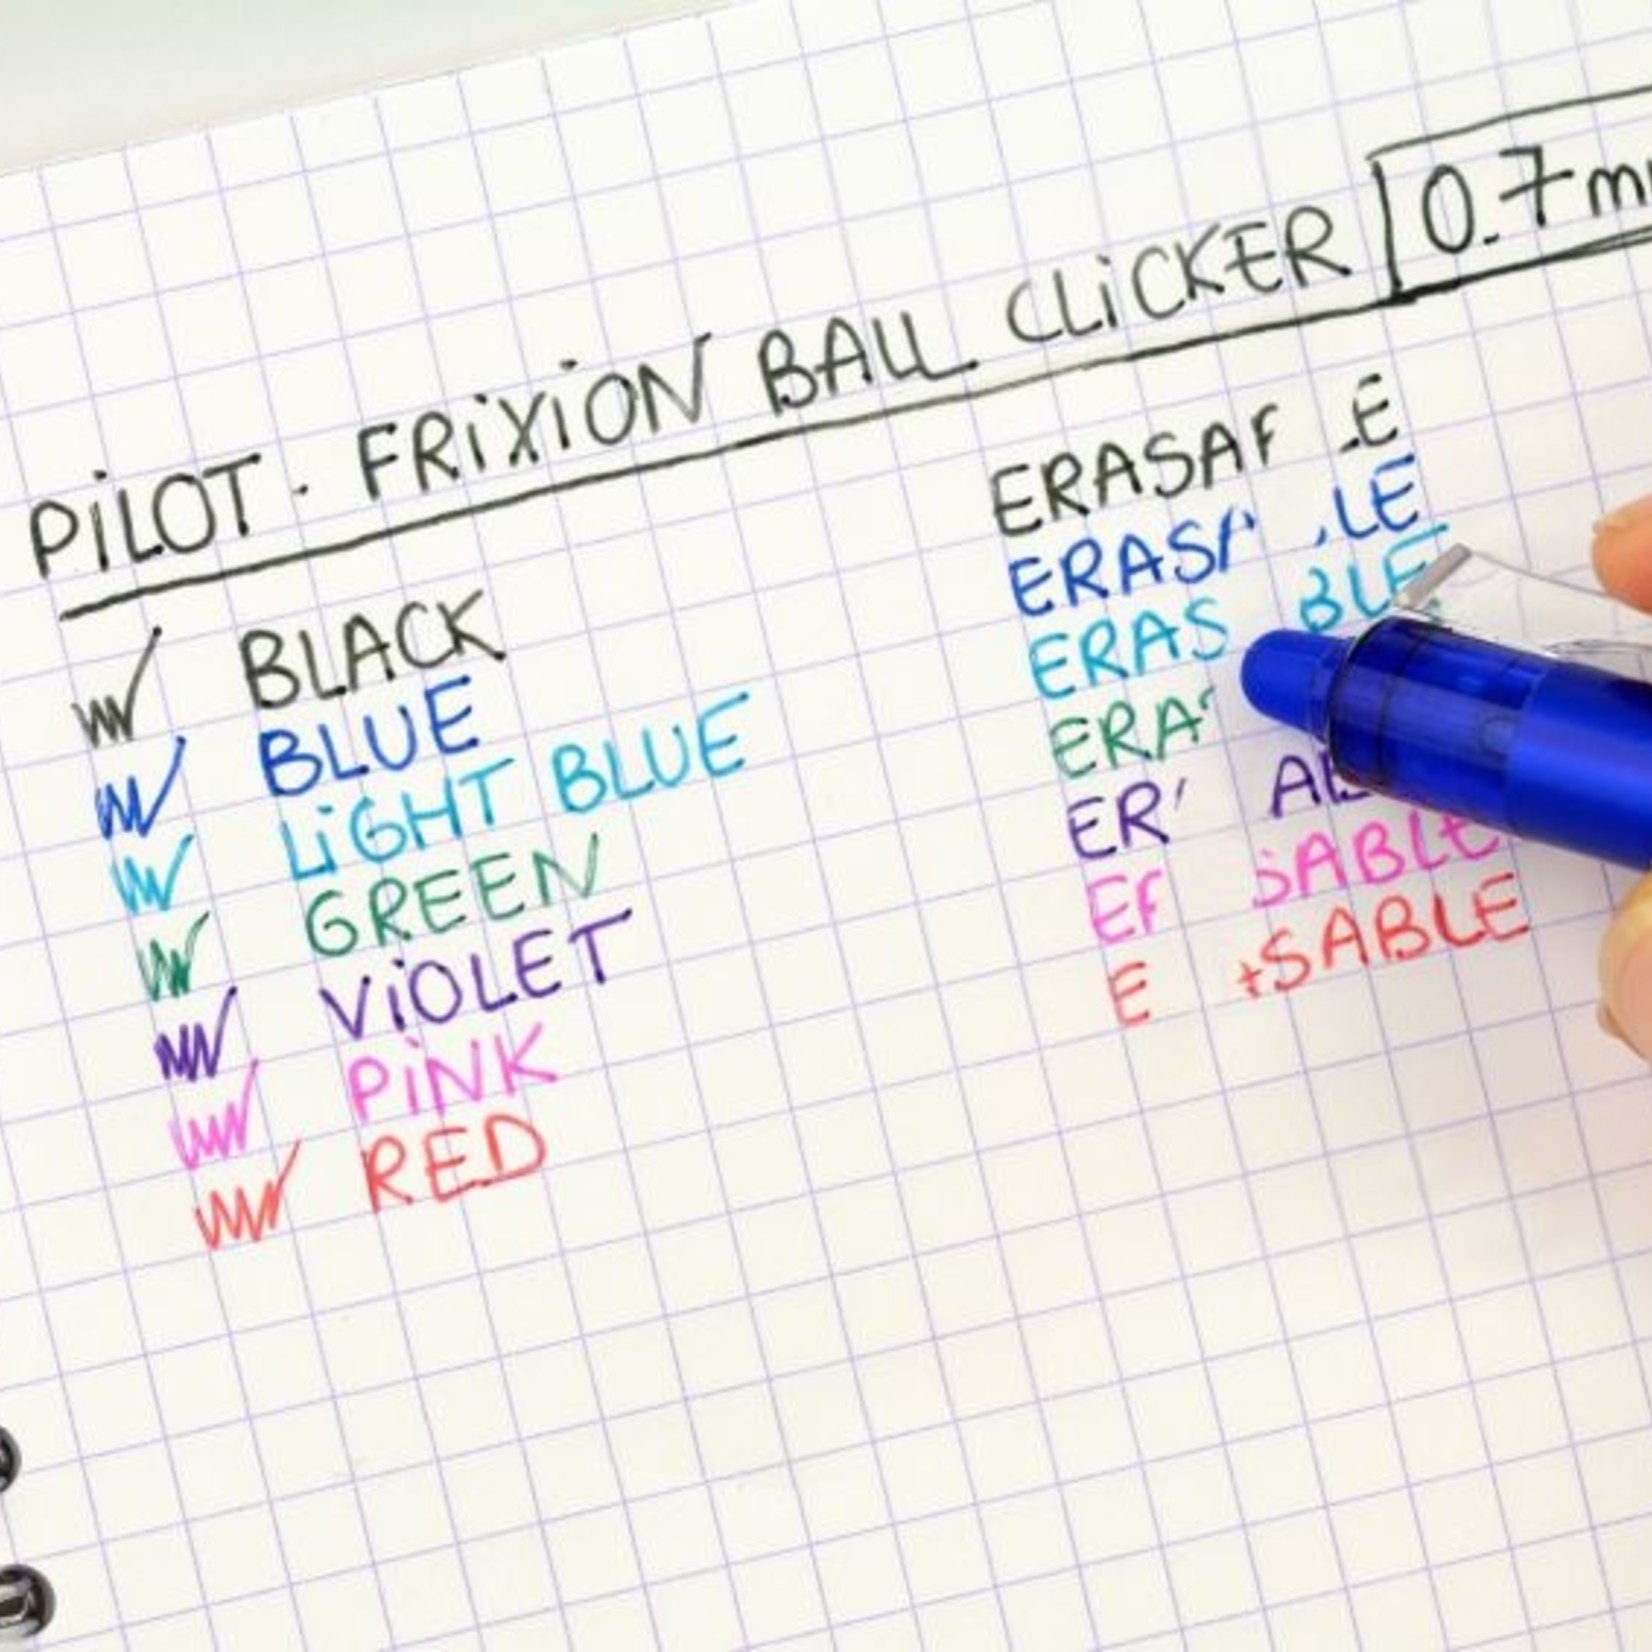 PILOT FRIXION BALL CLICKER ERASABLE INK PEN FINE 0.7MM VIOLET